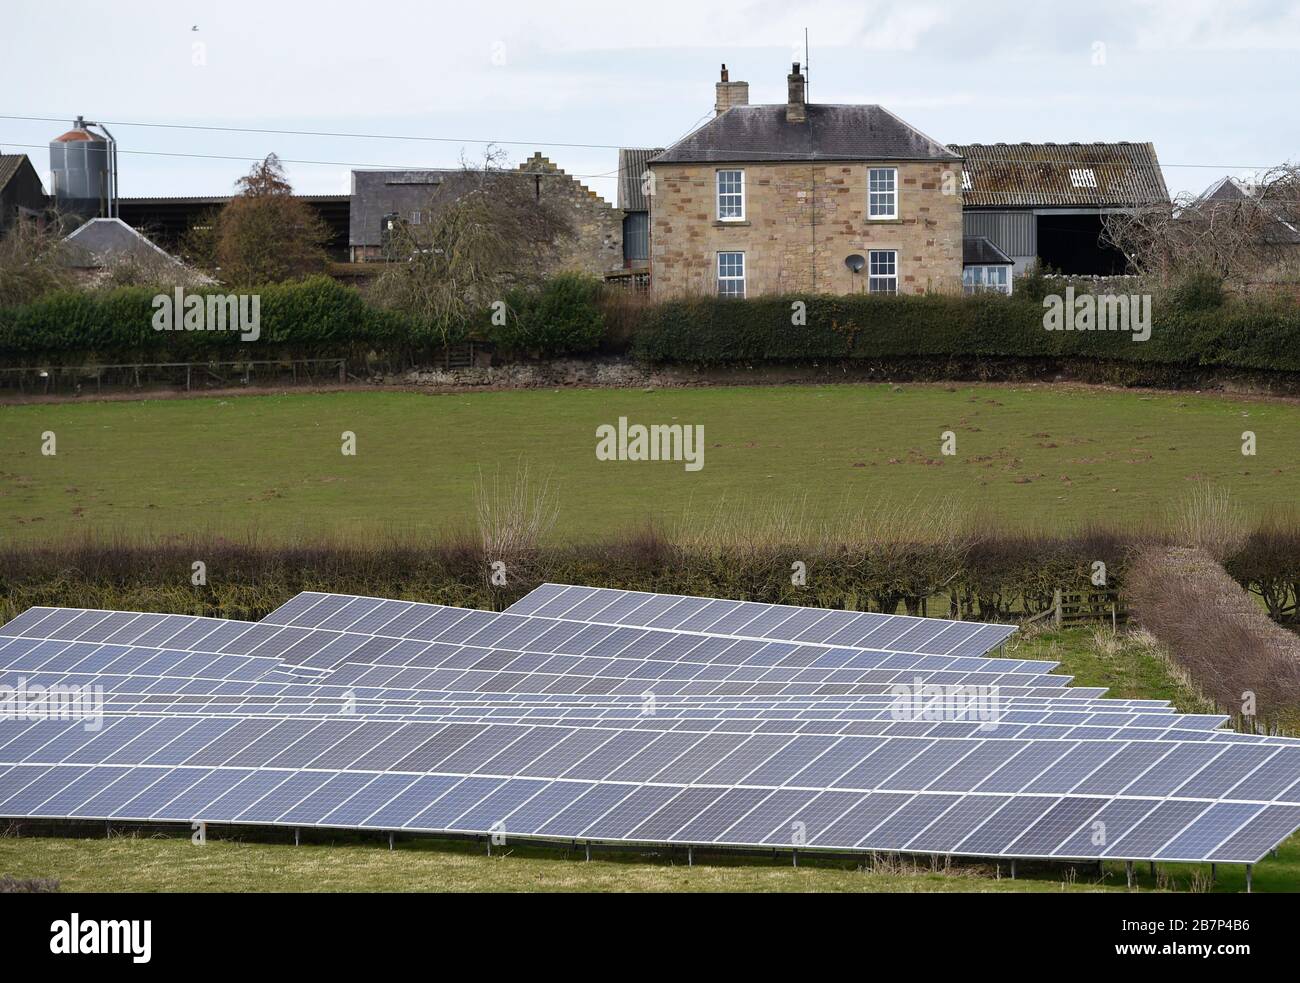 Rows of solar panels in a farmers field near Kelso, Scottish Borders, UK Stock Photo